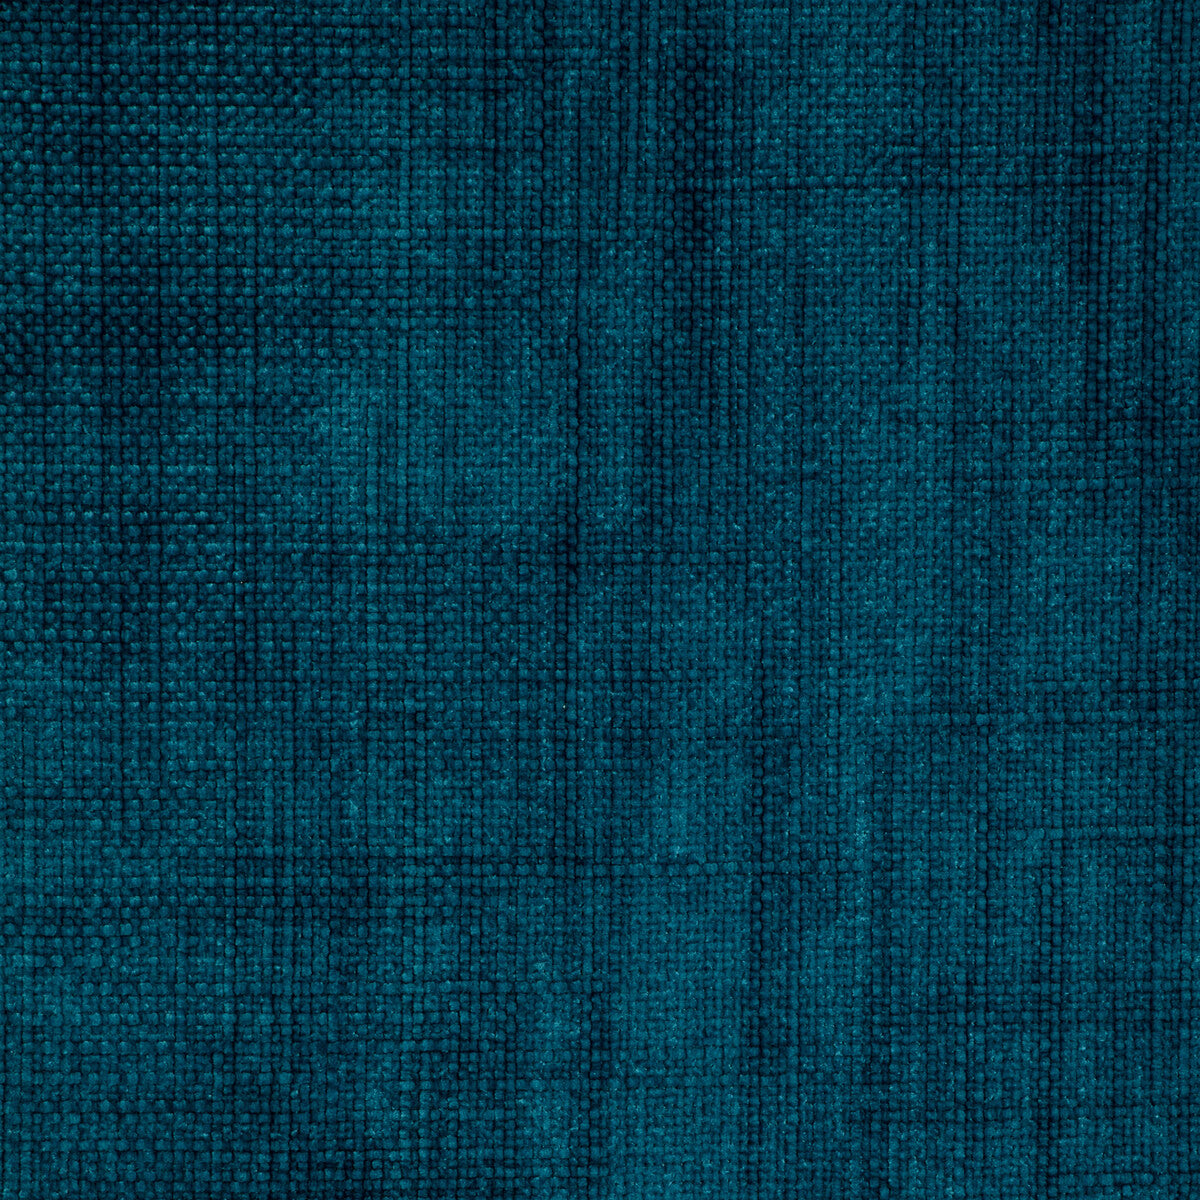 Kravet Smart fabric in 36991-55 color - pattern 36991.55.0 - by Kravet Smart in the Performance Kravetarmor collection